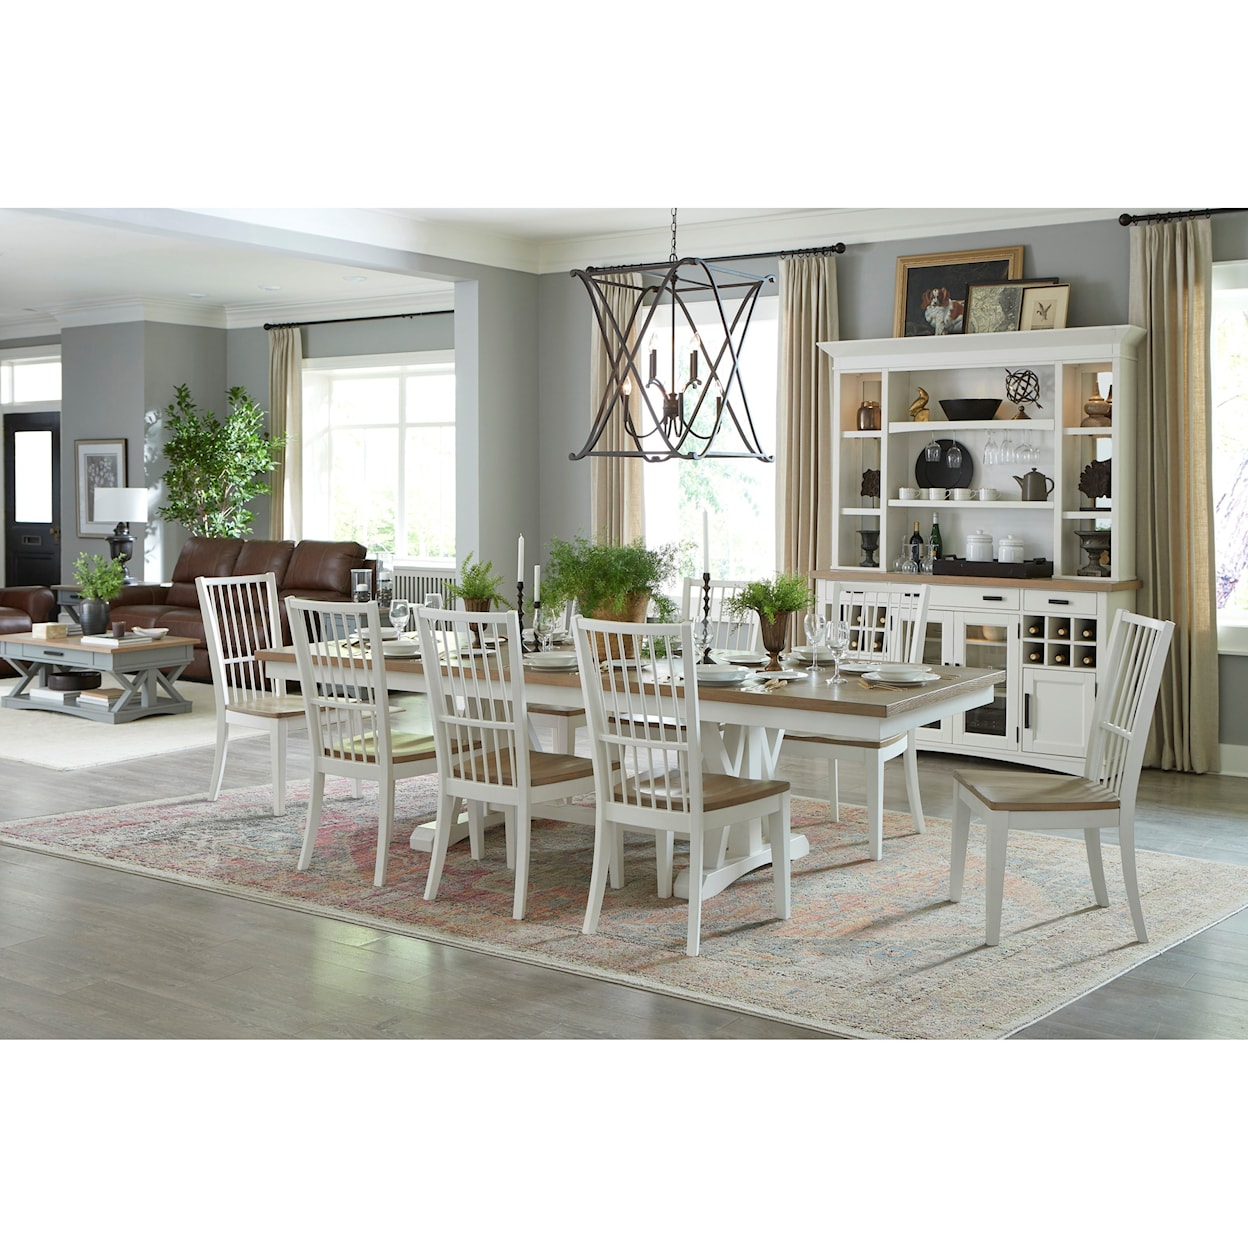 Paramount Furniture Americana Modern Dining Table